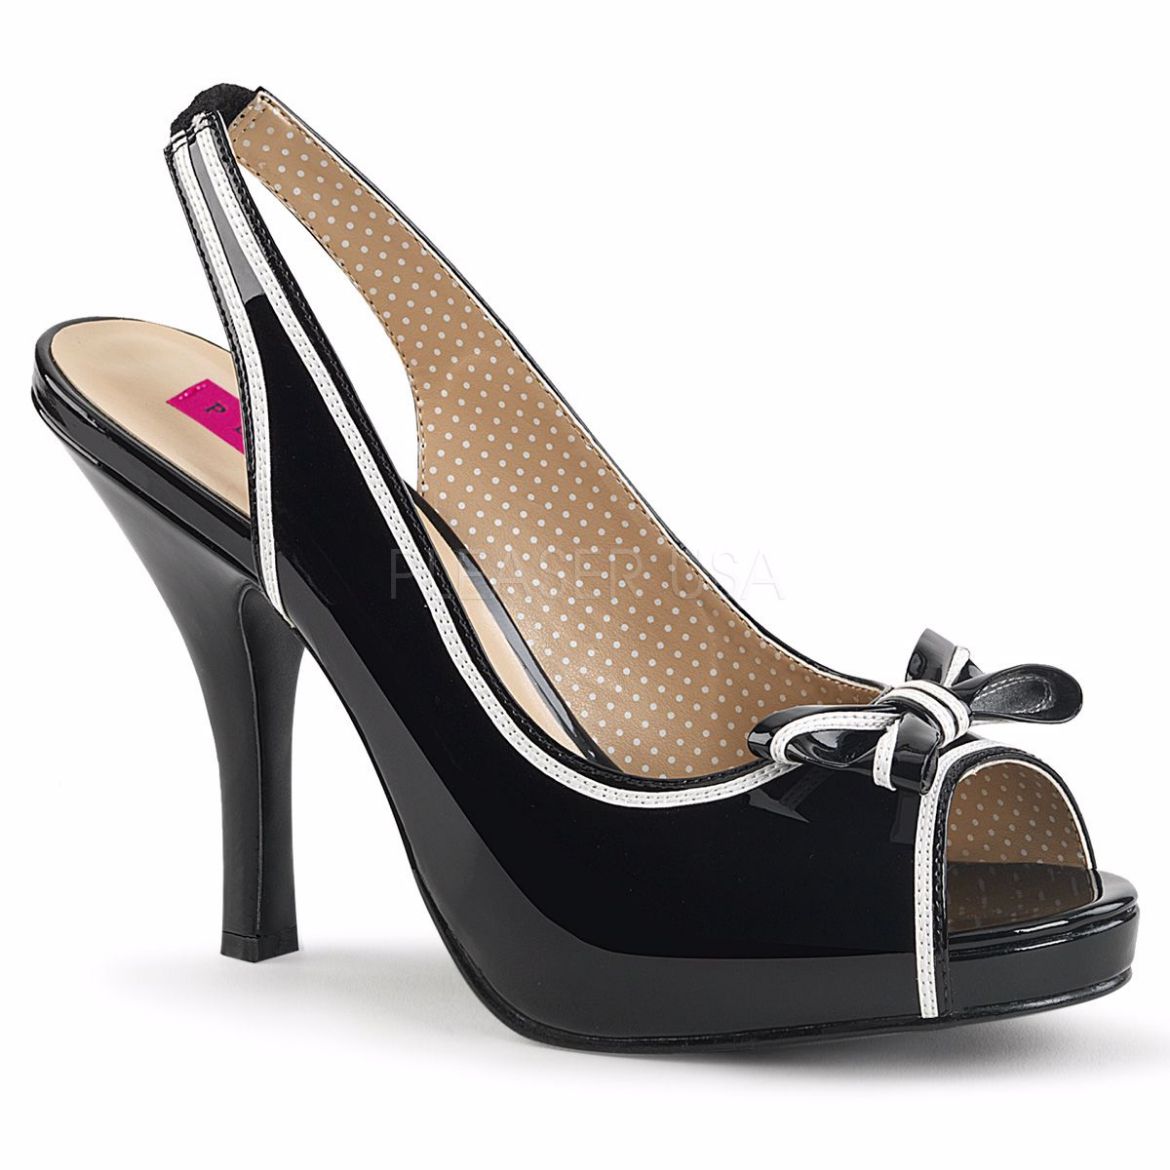 Product image of Pleaser Pink Label Pinup-10 Black-White Patent, 4 1/2 inch (11.4 cm) Heel, 3/4 inch (1.9 cm) Platform Sandal Shoes